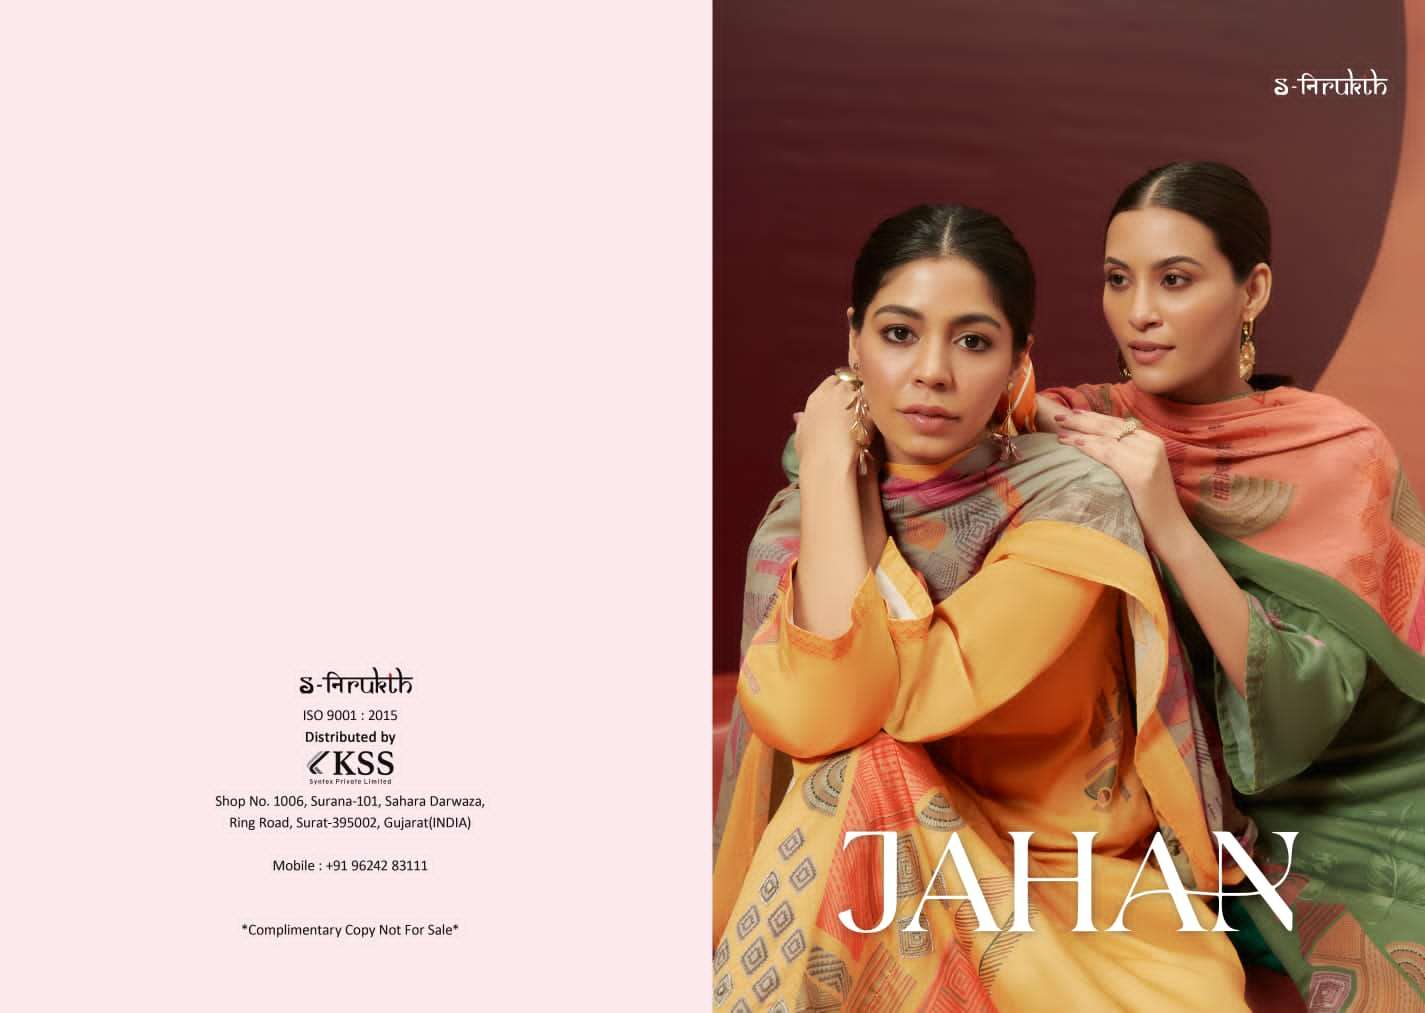 sahiba nirukth jahan designer pakistani salwar kameez wholesale surat gujarat